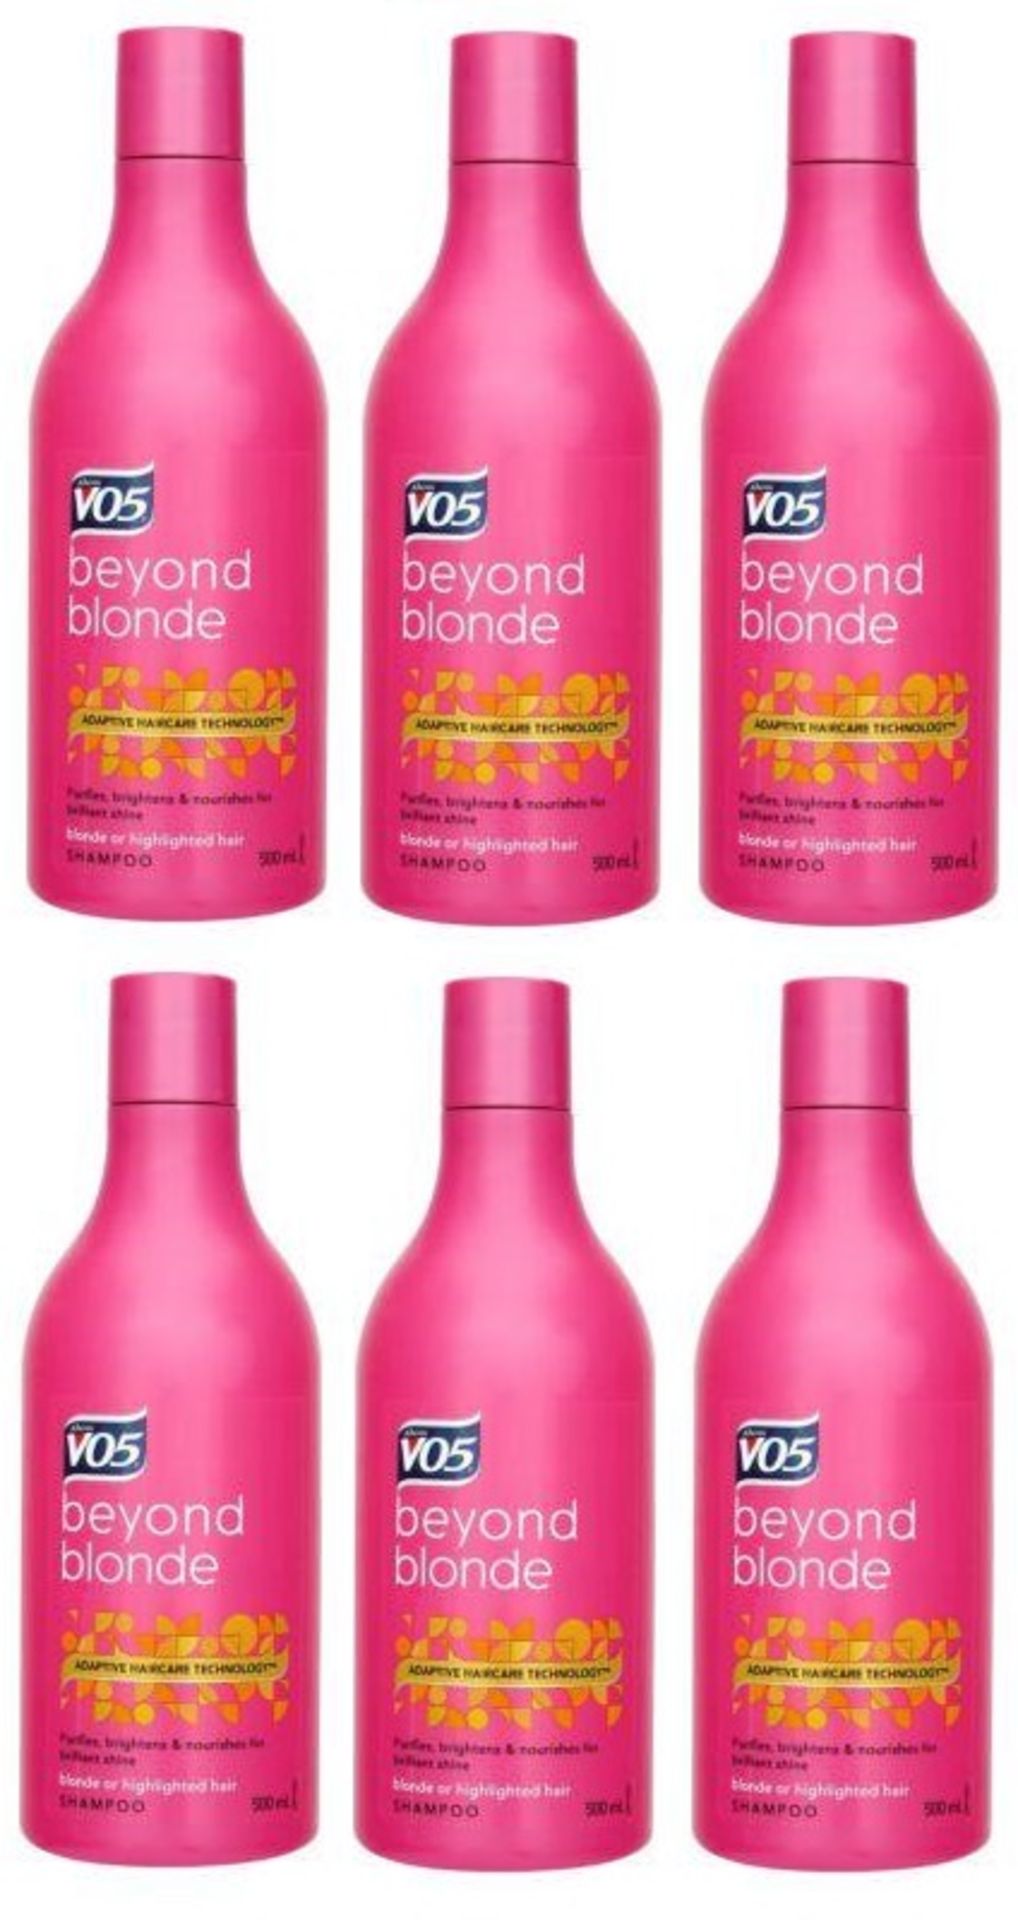 V *TRADE QTY* Brand New Lot Of 6 VO5 Beyond Blonde Shampoo 500ml - Purifies Brightens & Nourishes